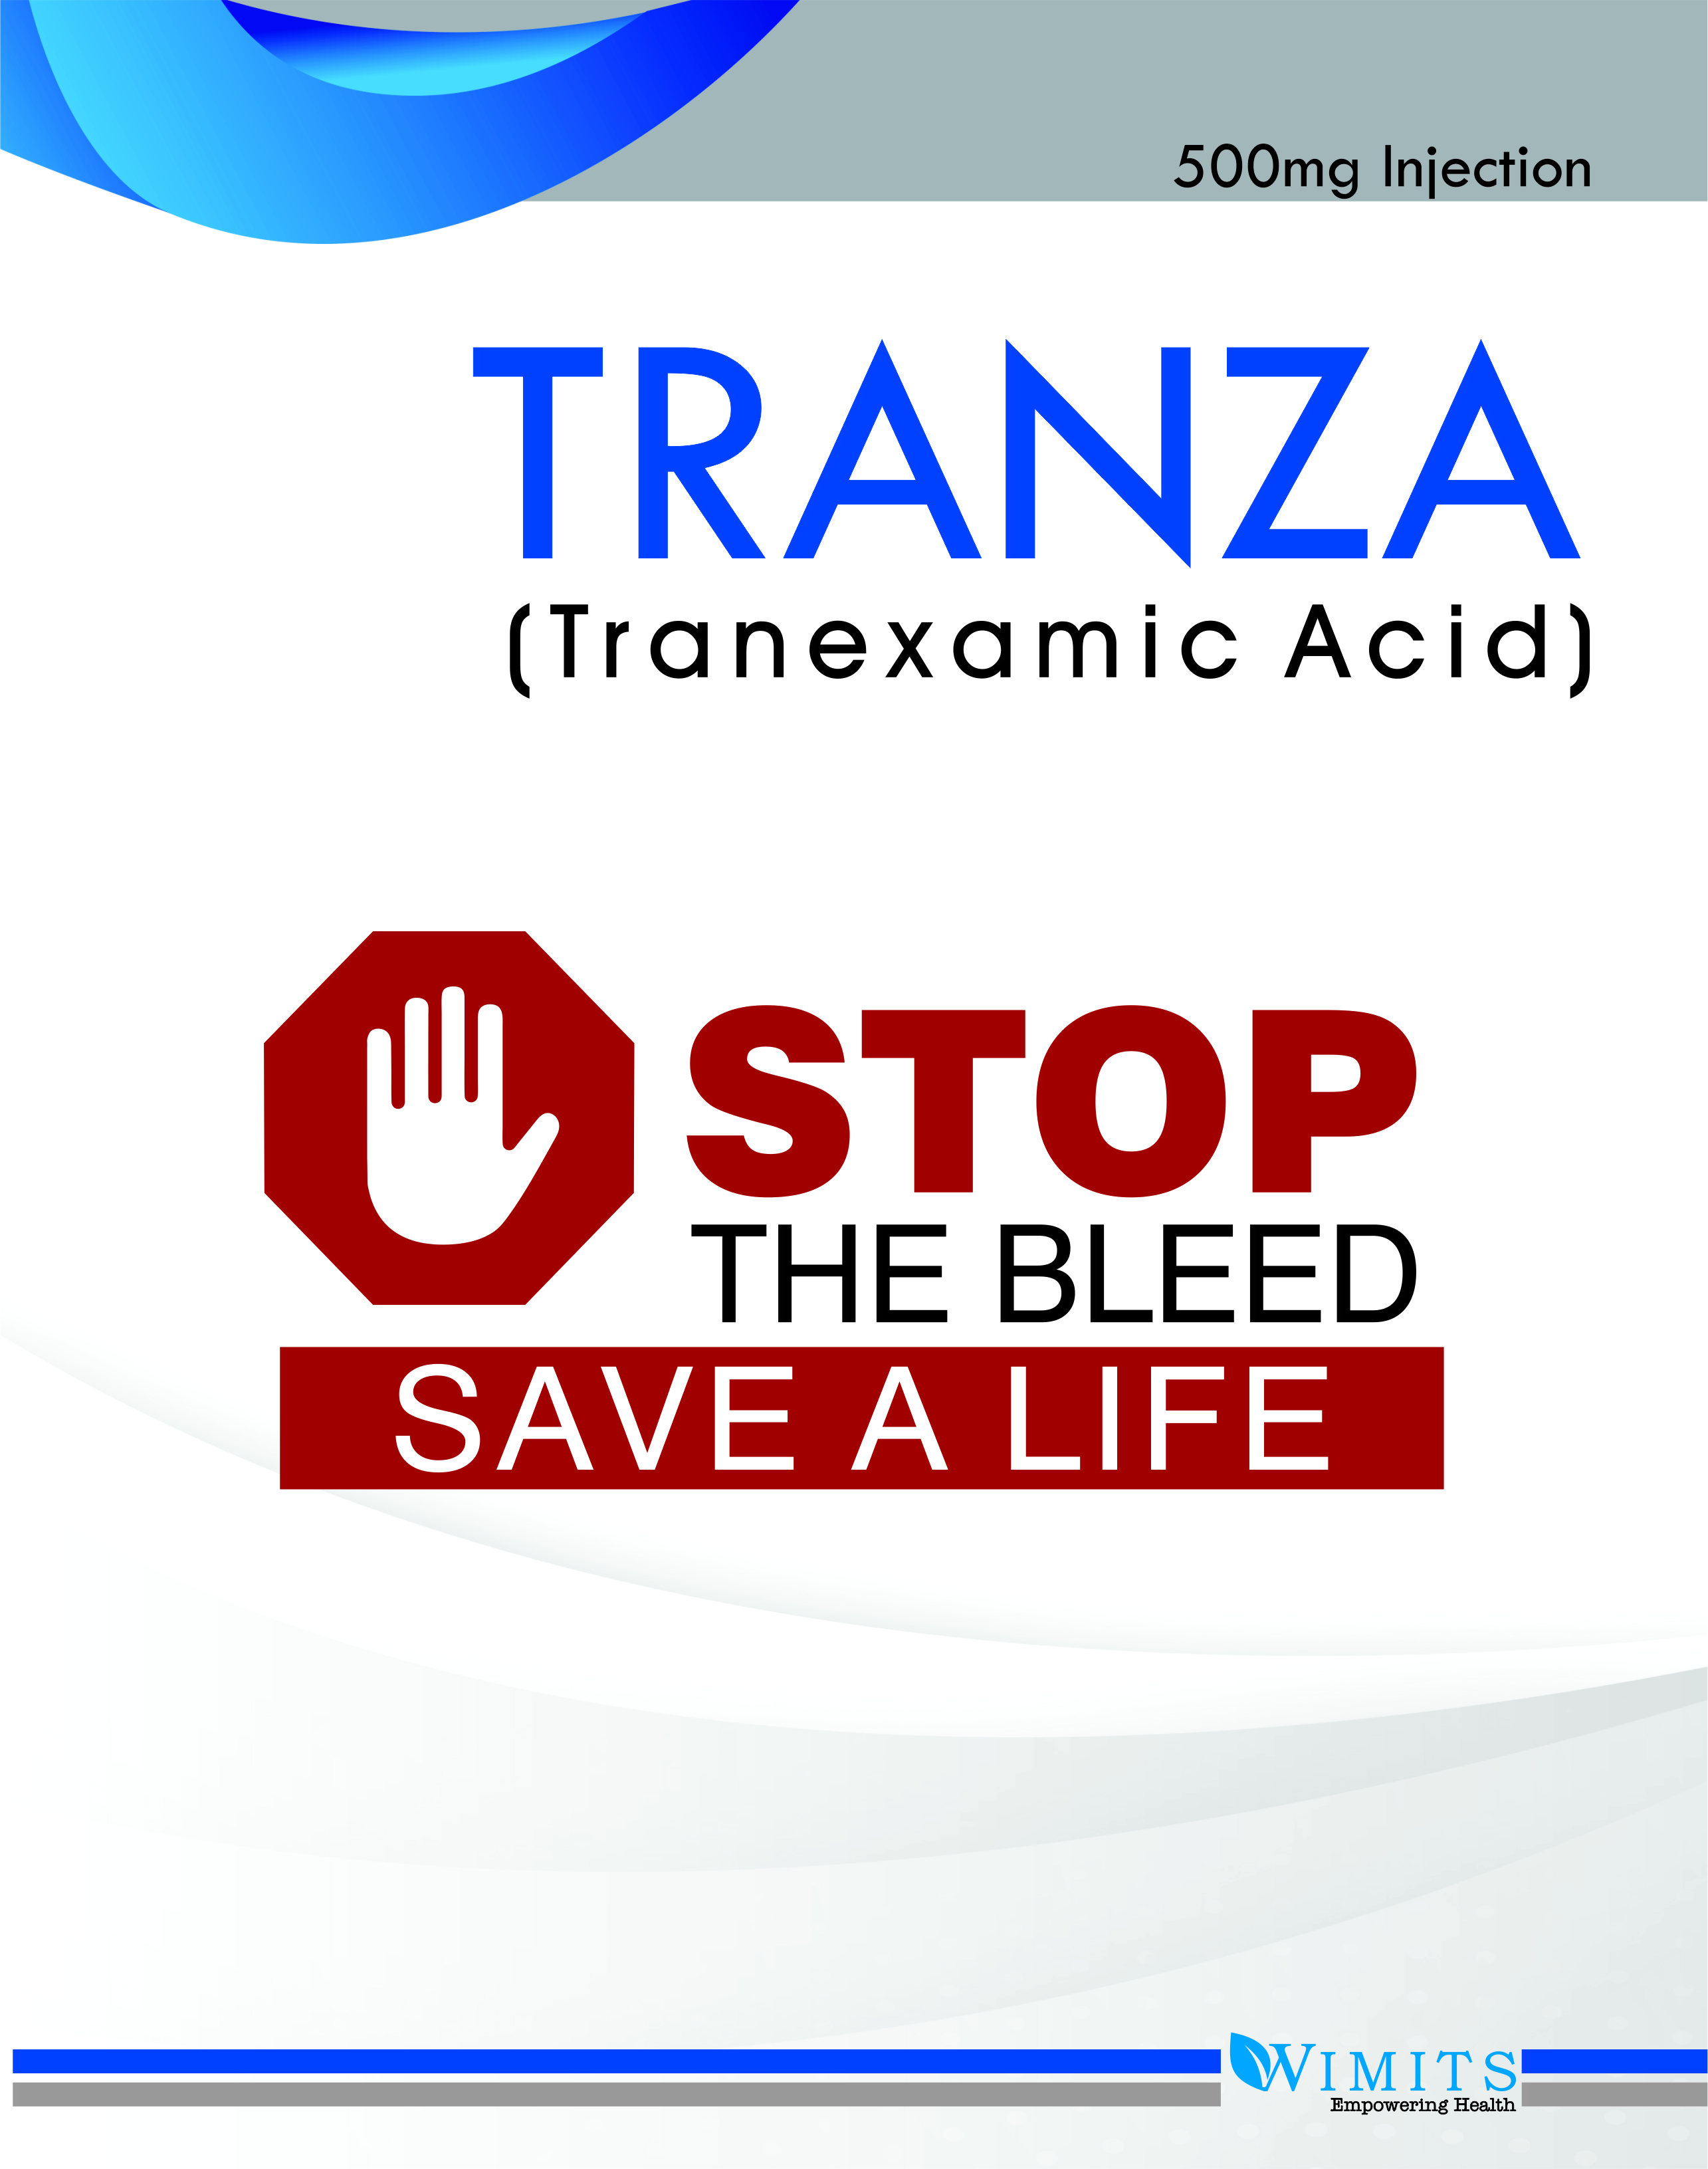 Tranza – Tranexamic Acid